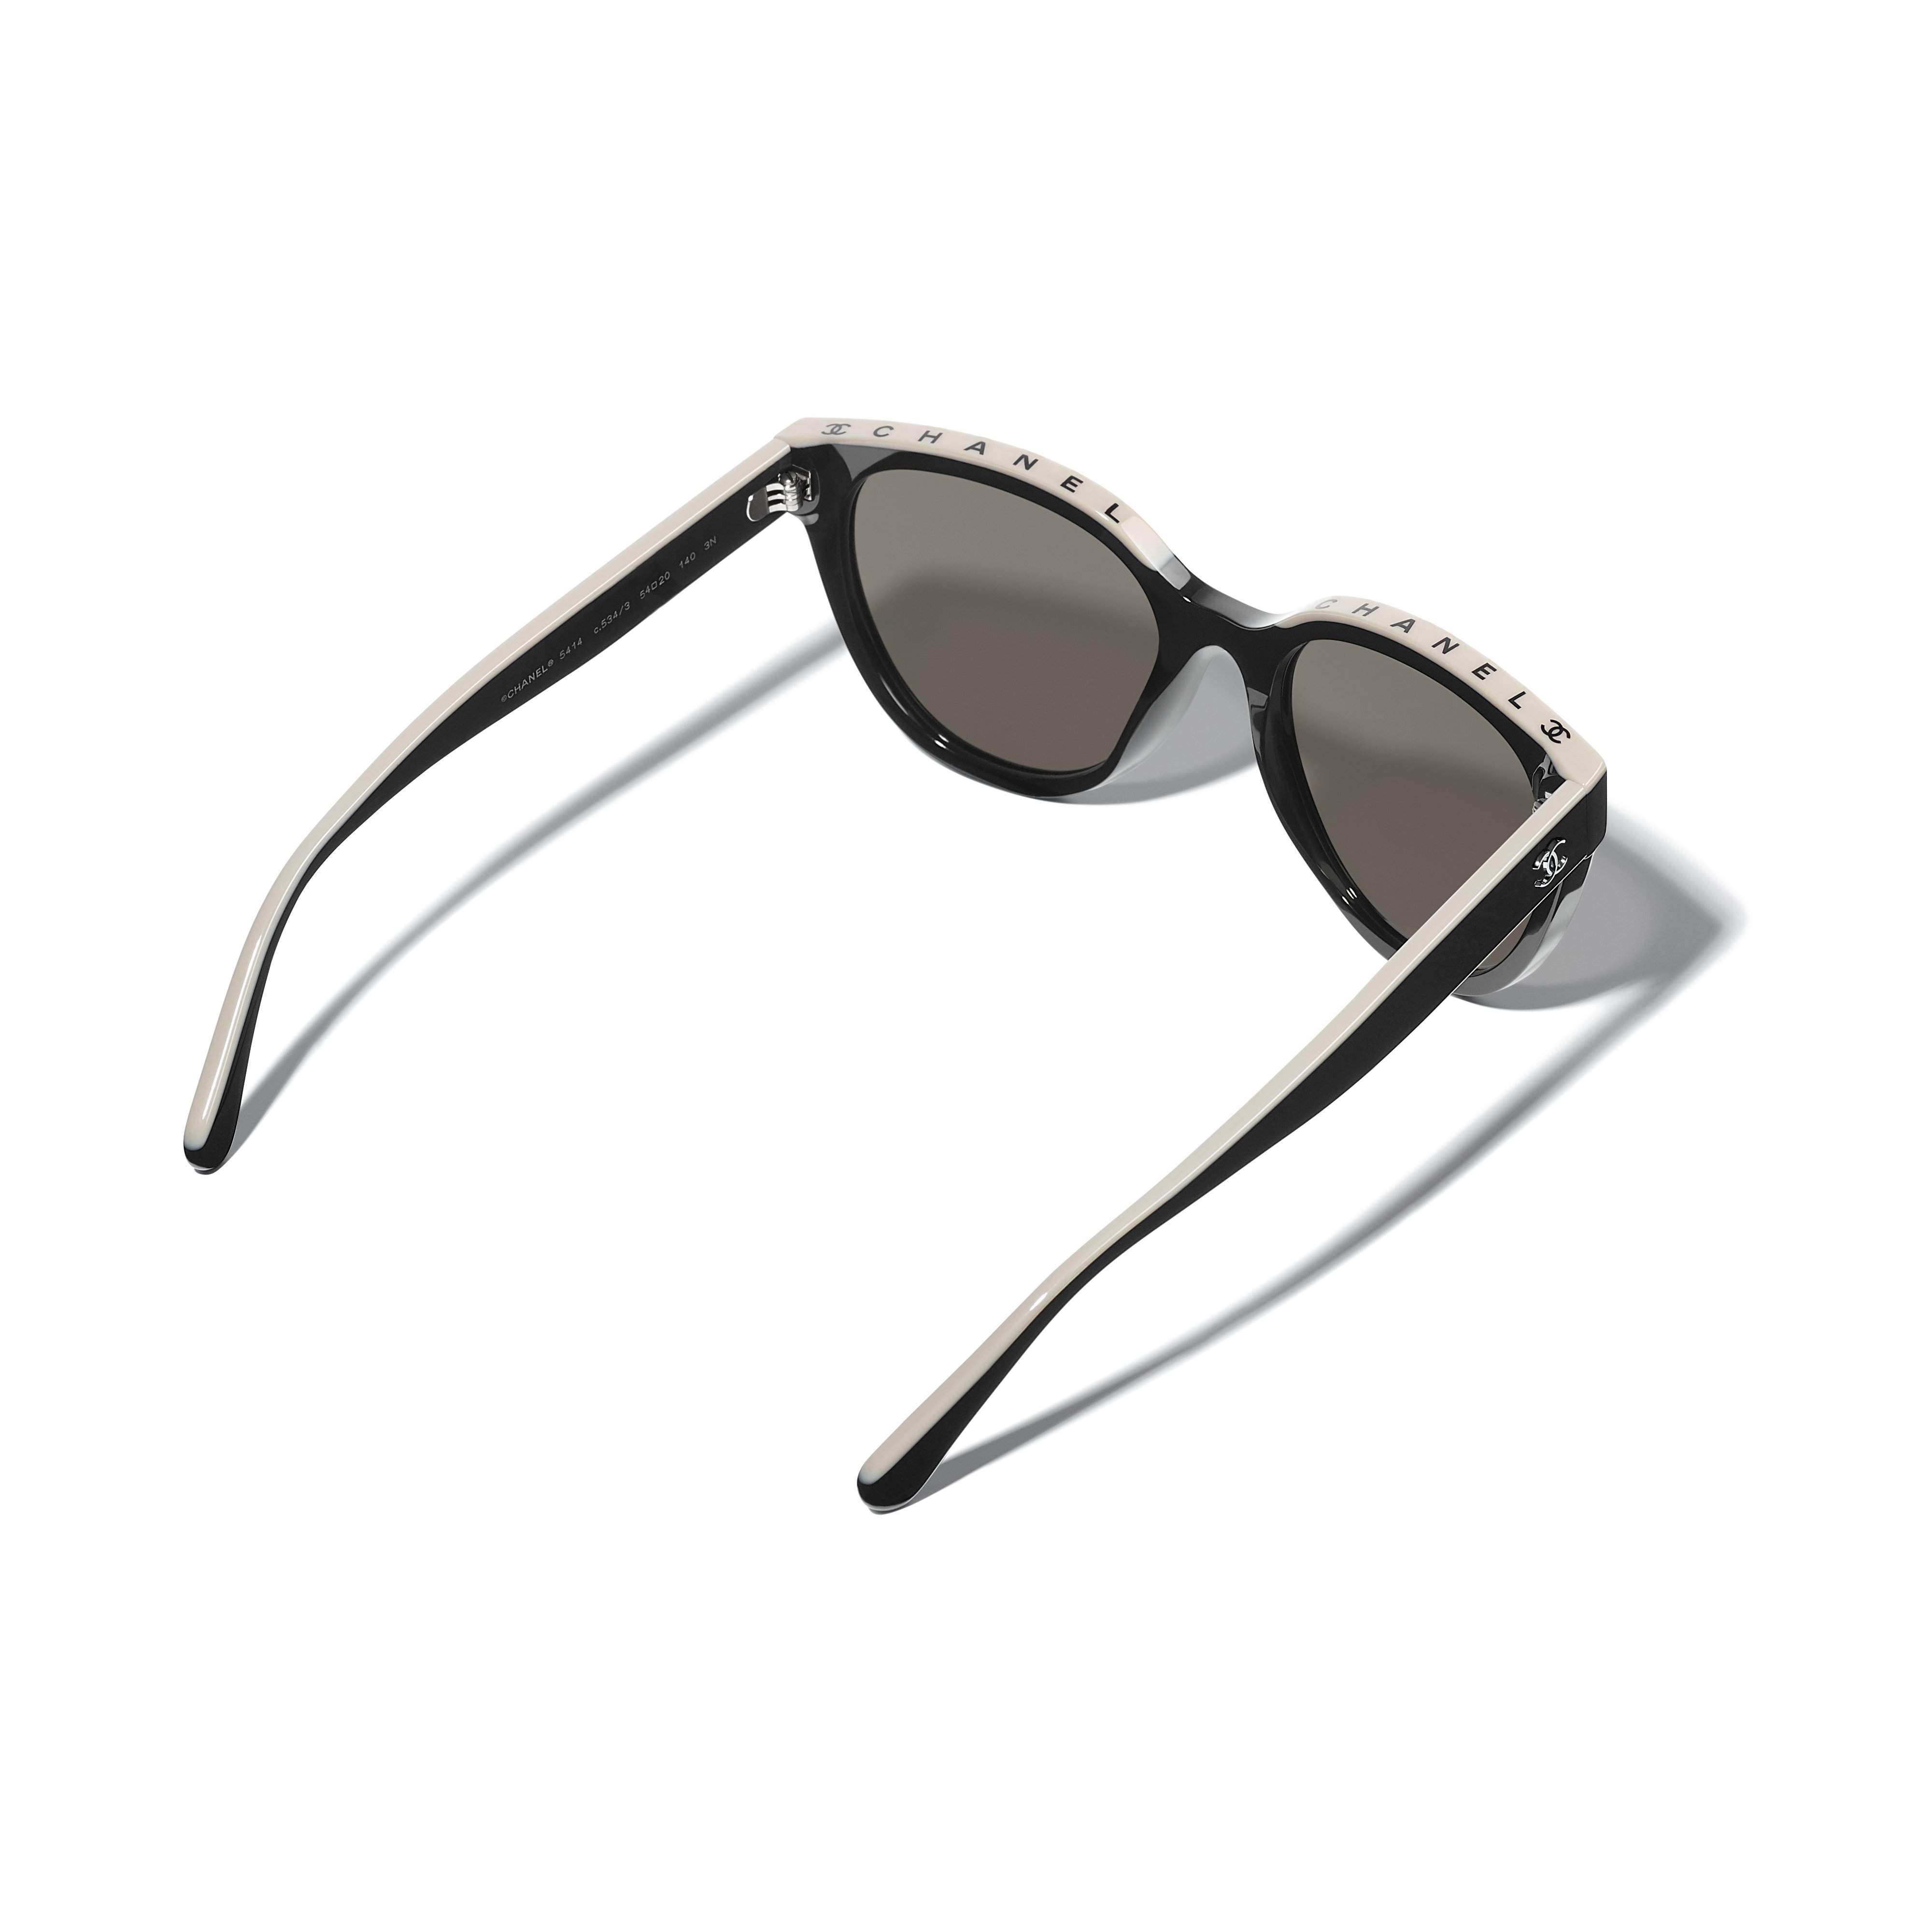 chanel square sunglasses black and beige